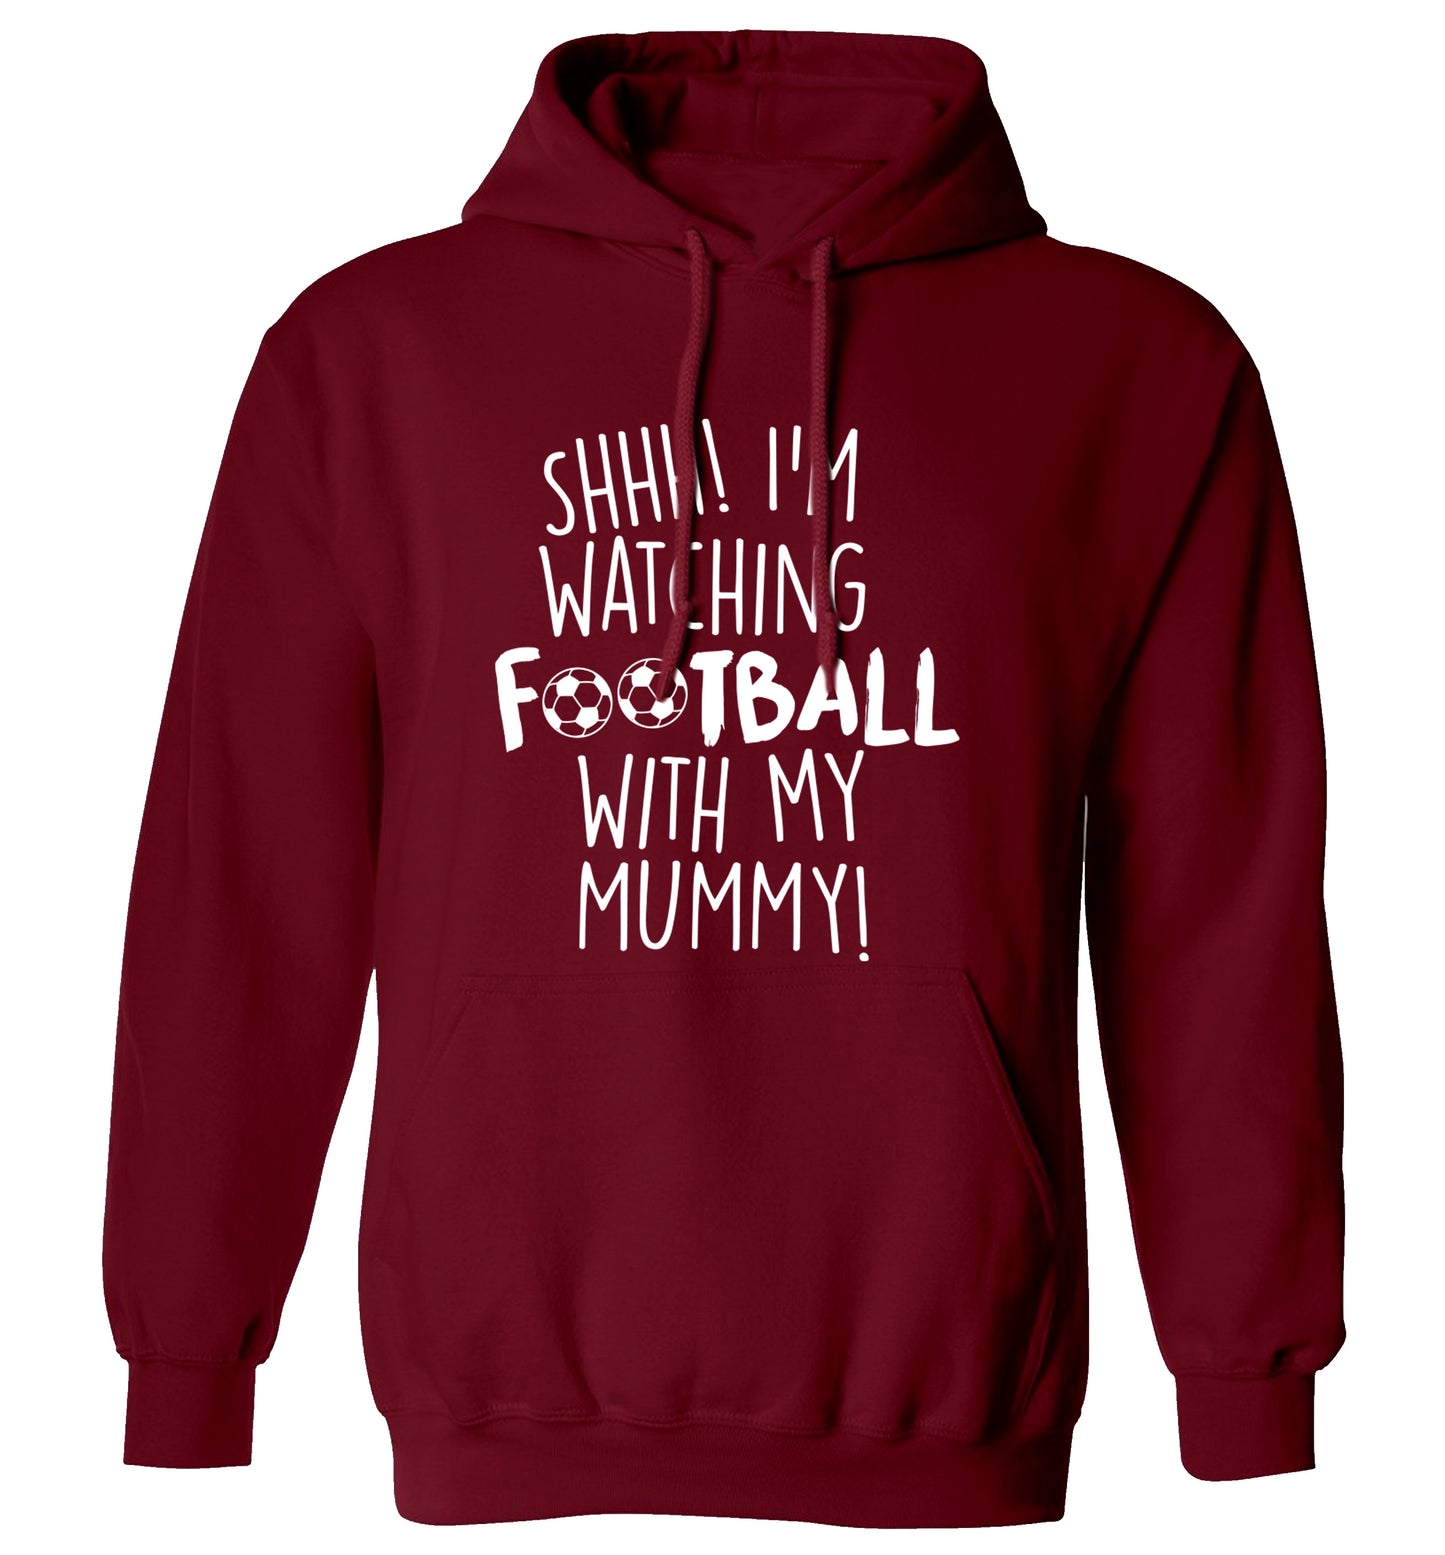 Shhh I'm watching football with my mummy adults unisexmaroon hoodie 2XL